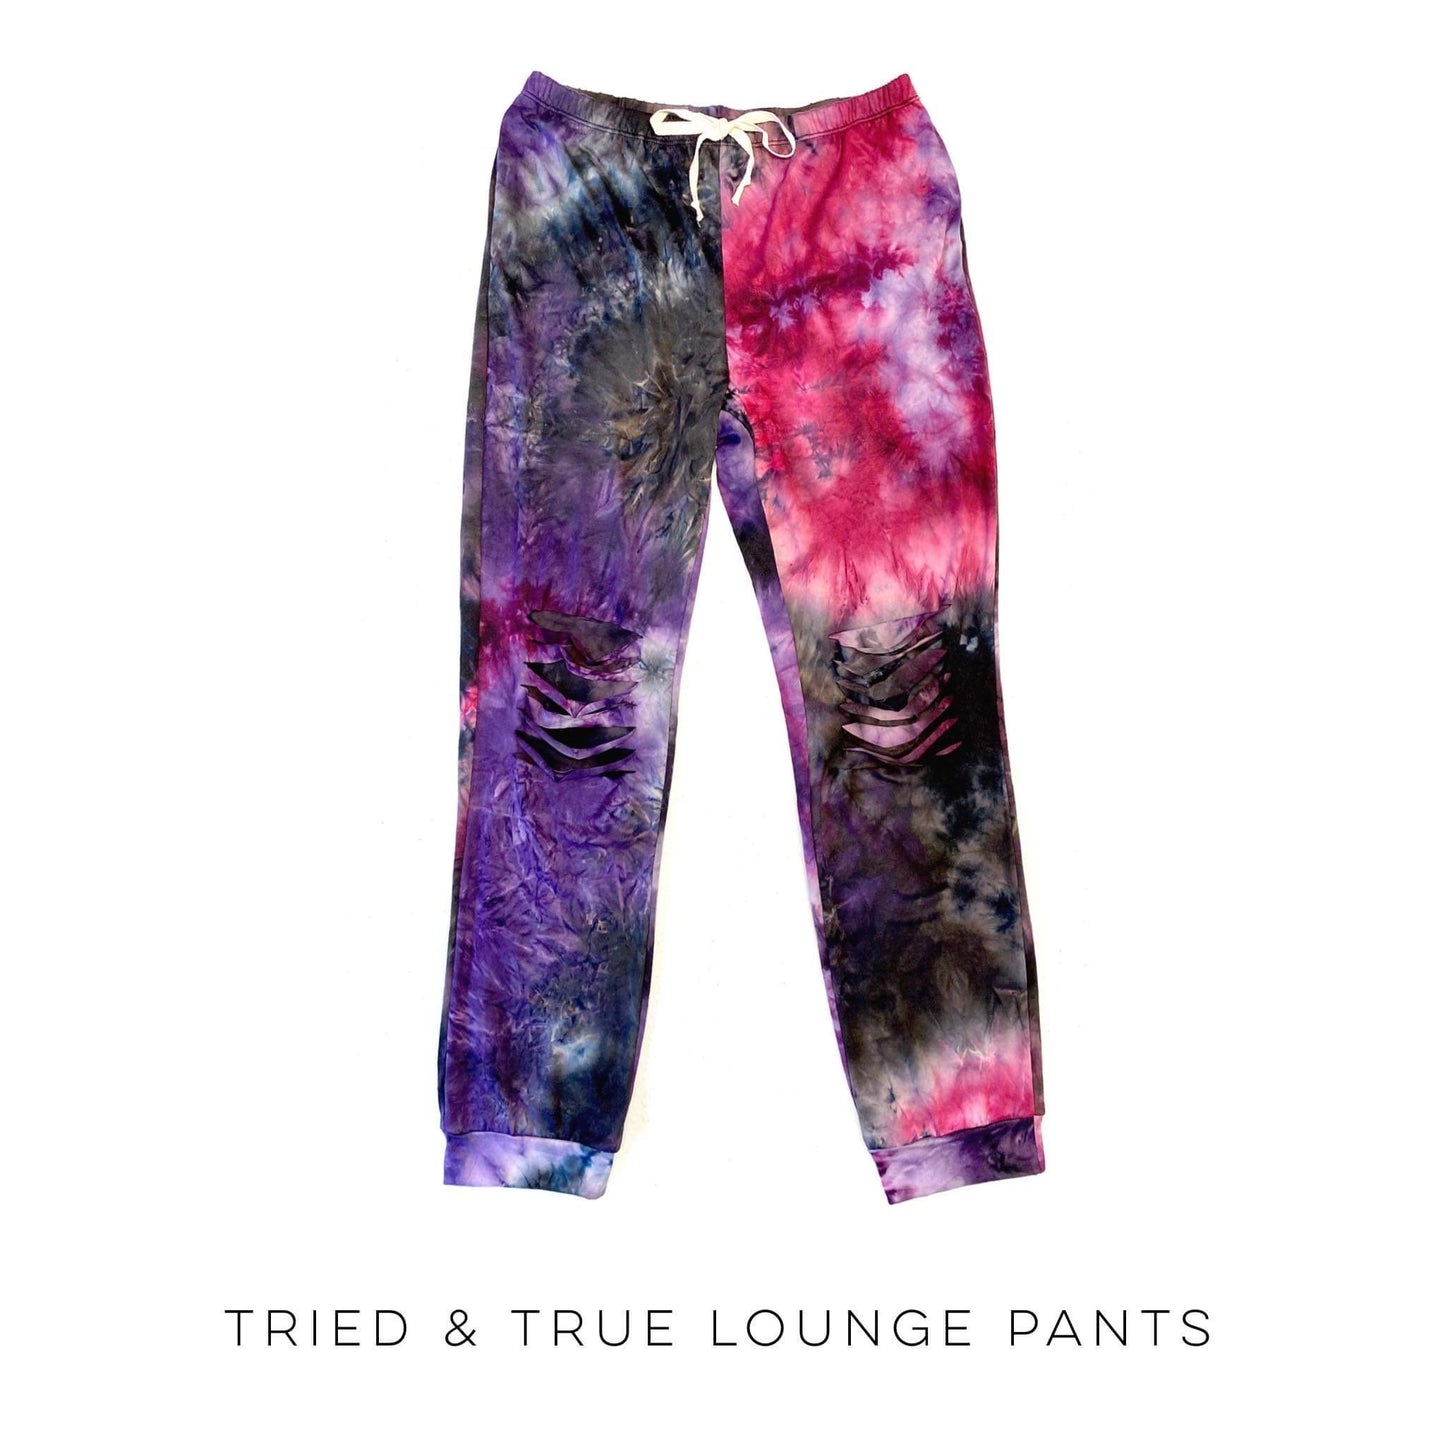 Tried & True Lounge Pants